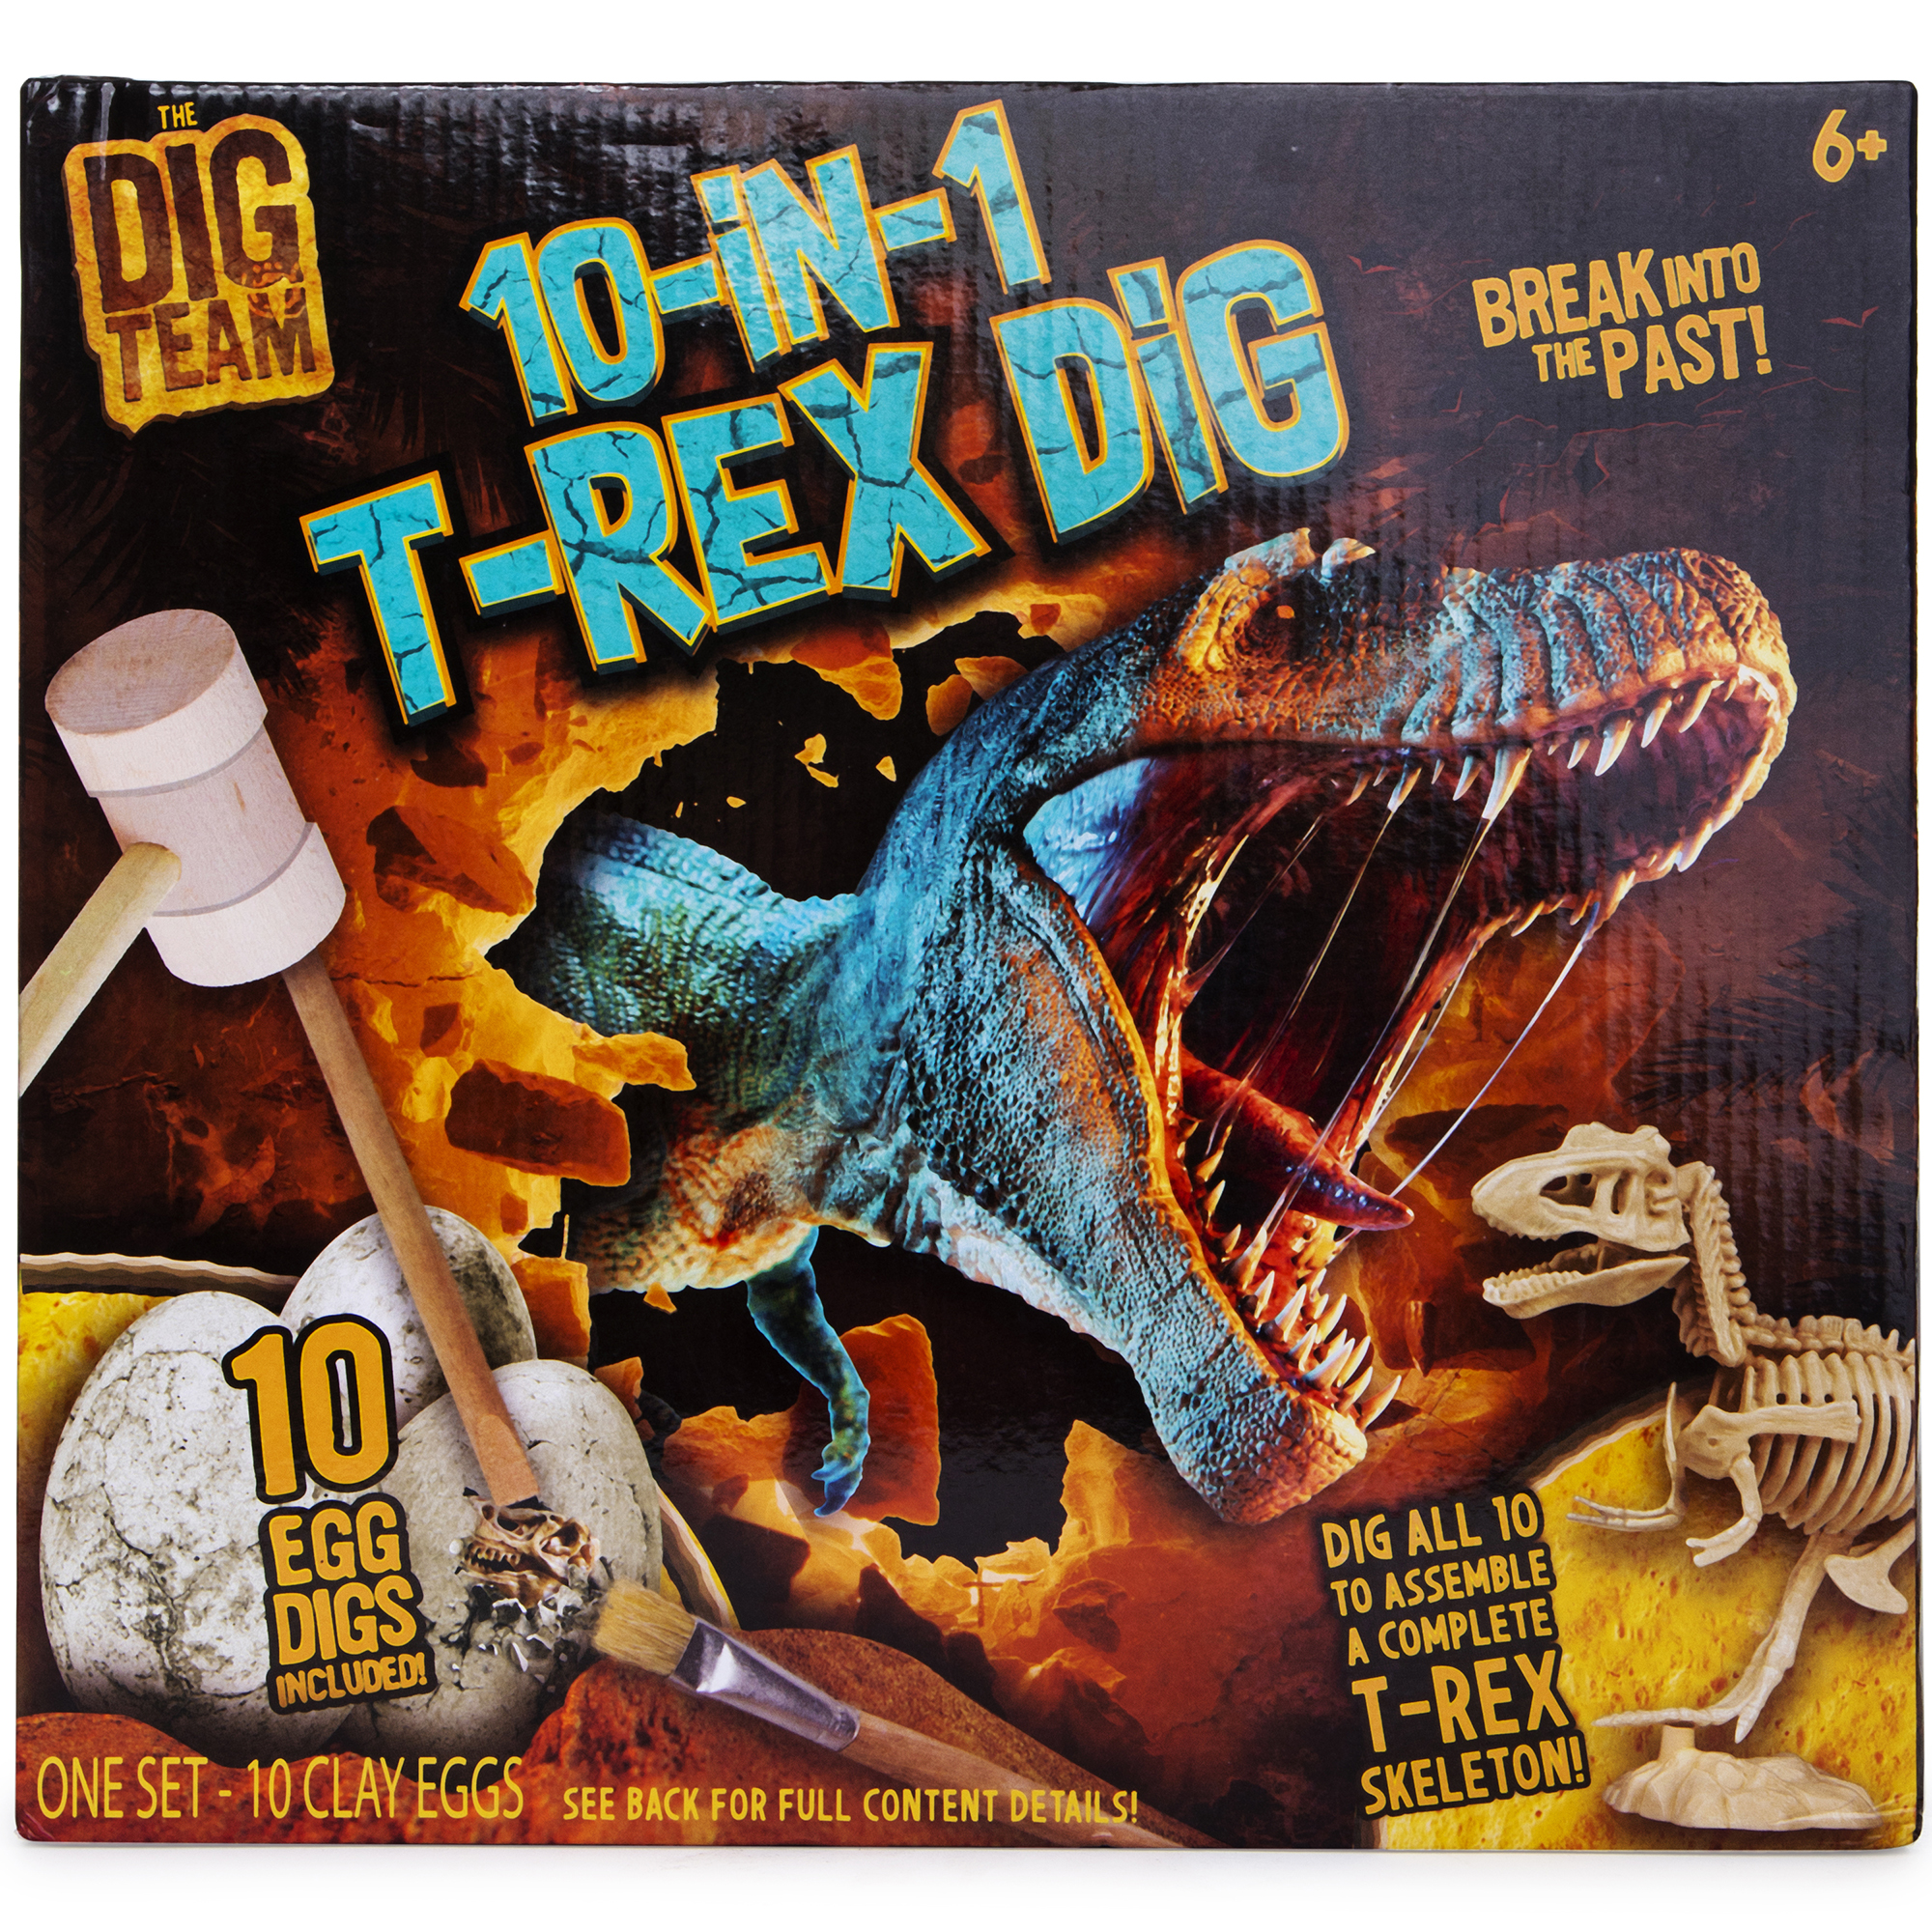 The Dig Team® 10-in-1 T-Rex Dig Kit